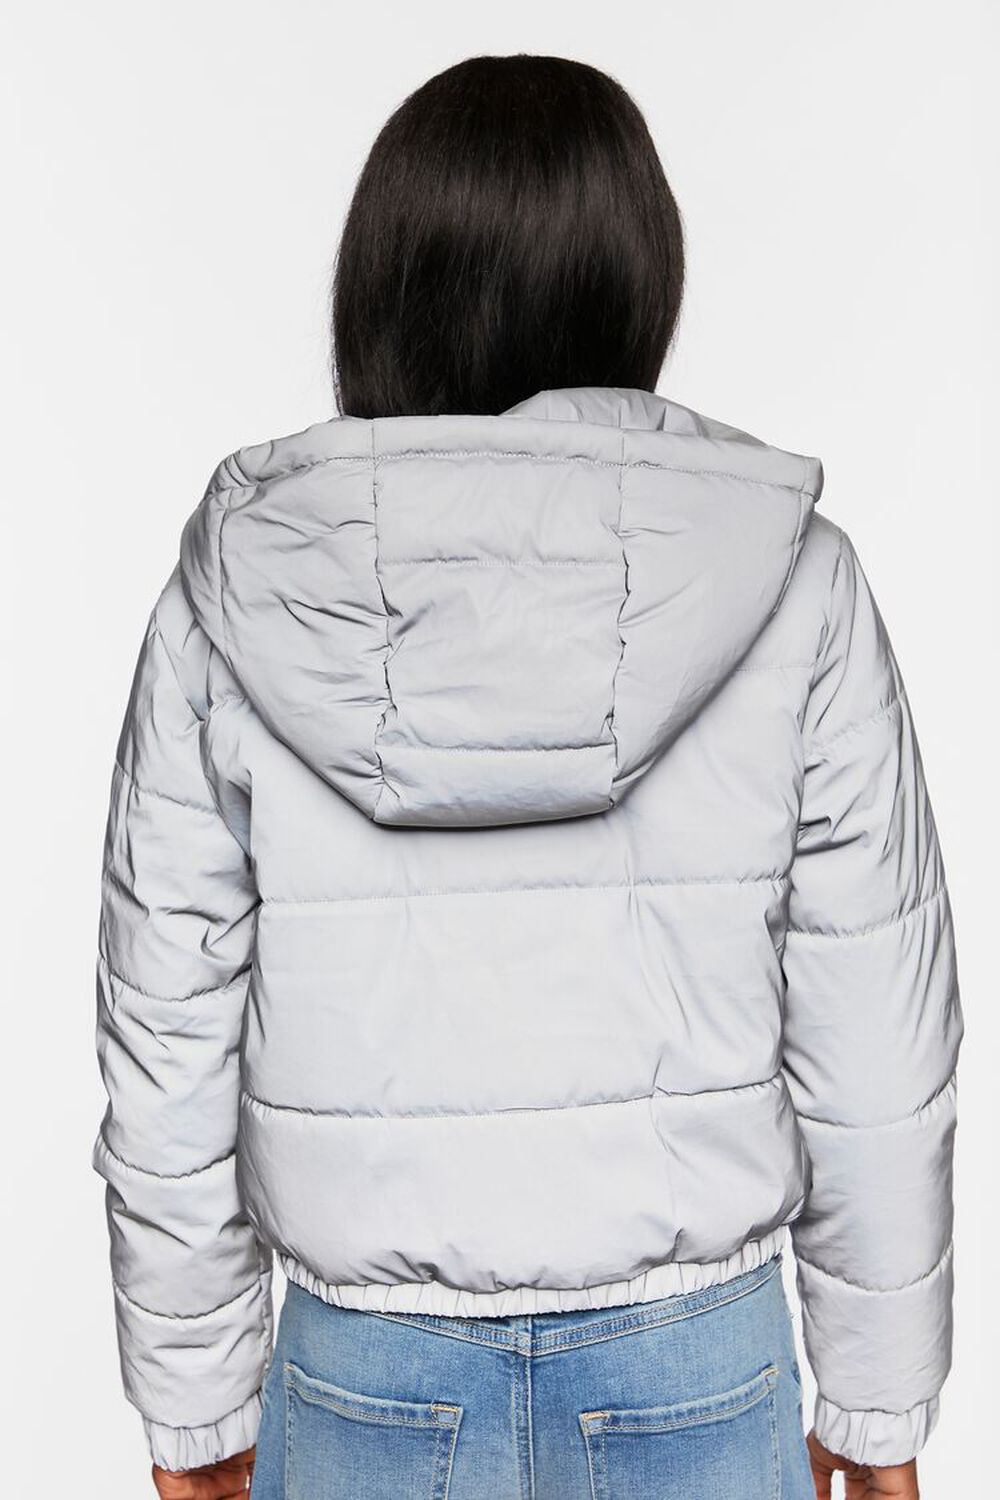 Reflective Hooded Puffer Jacket, image 3